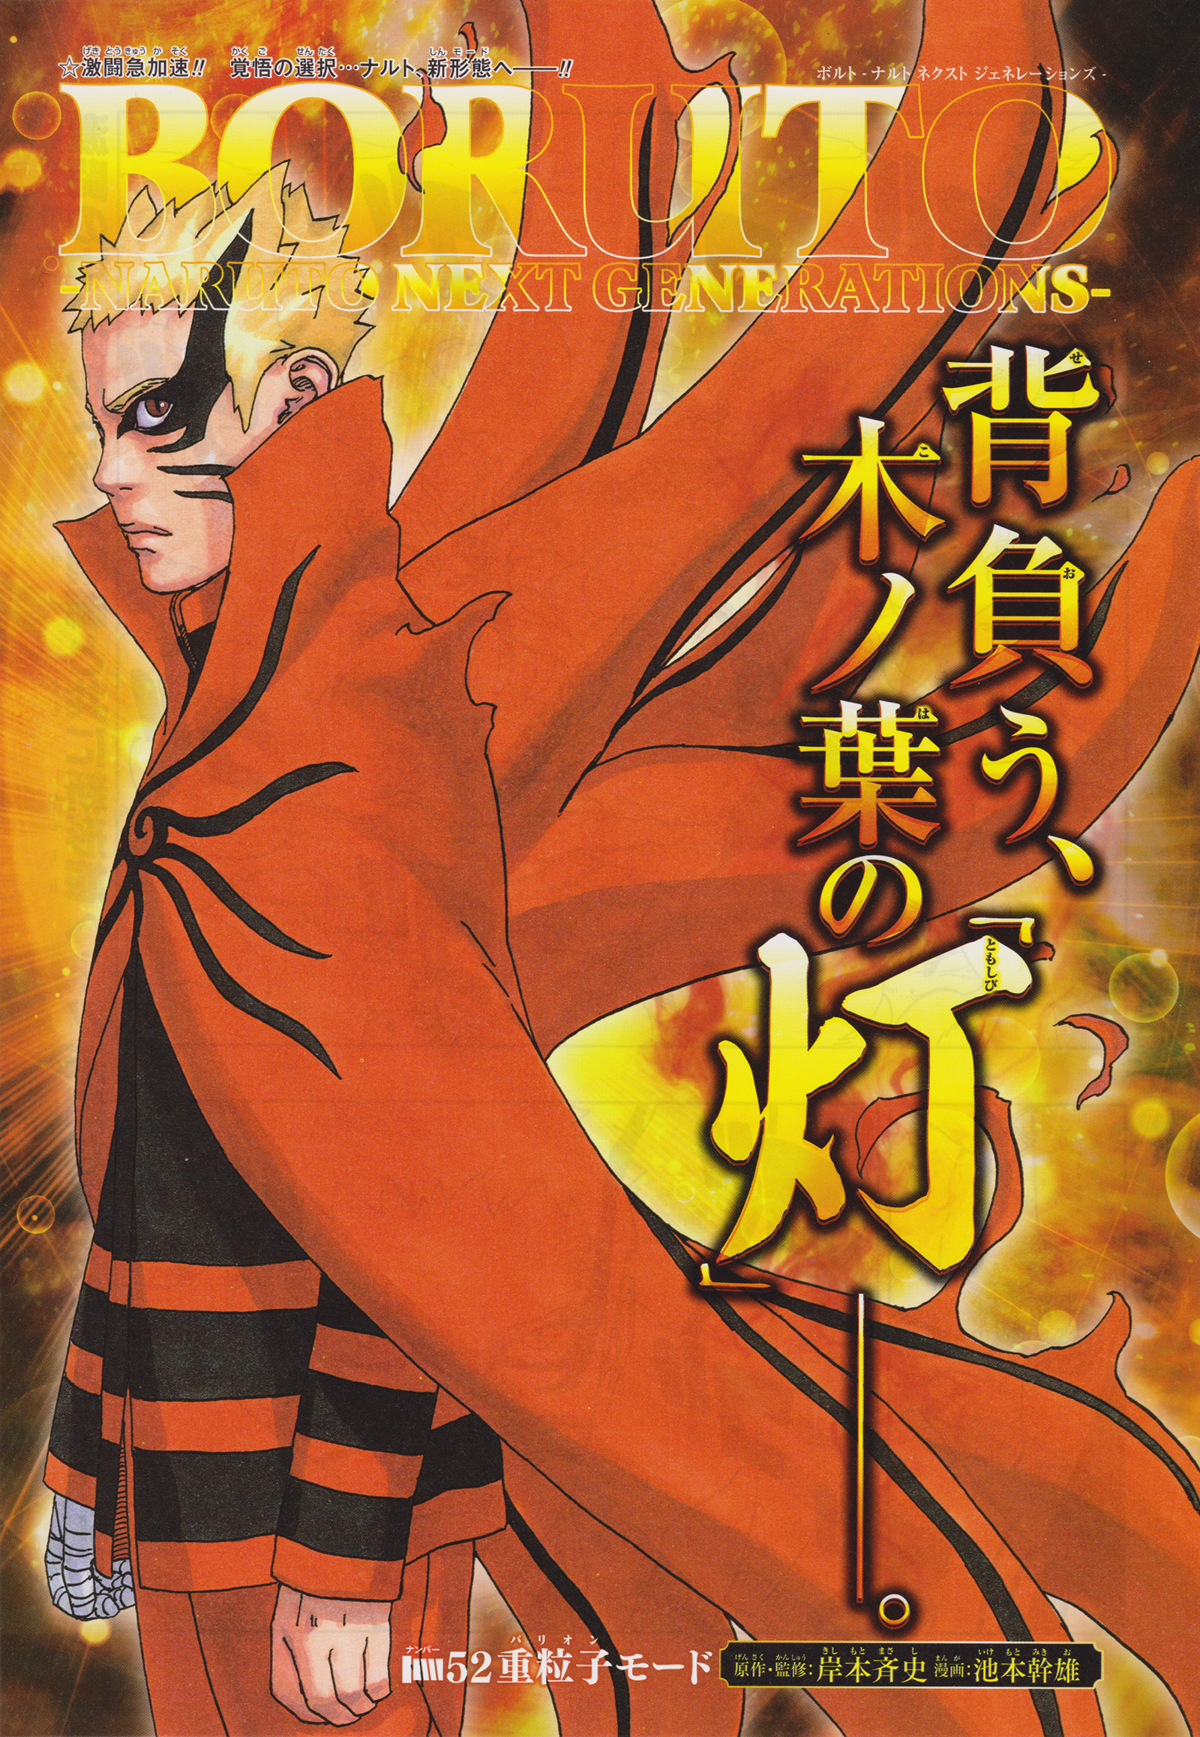 Naruto baryon mode wallpaper